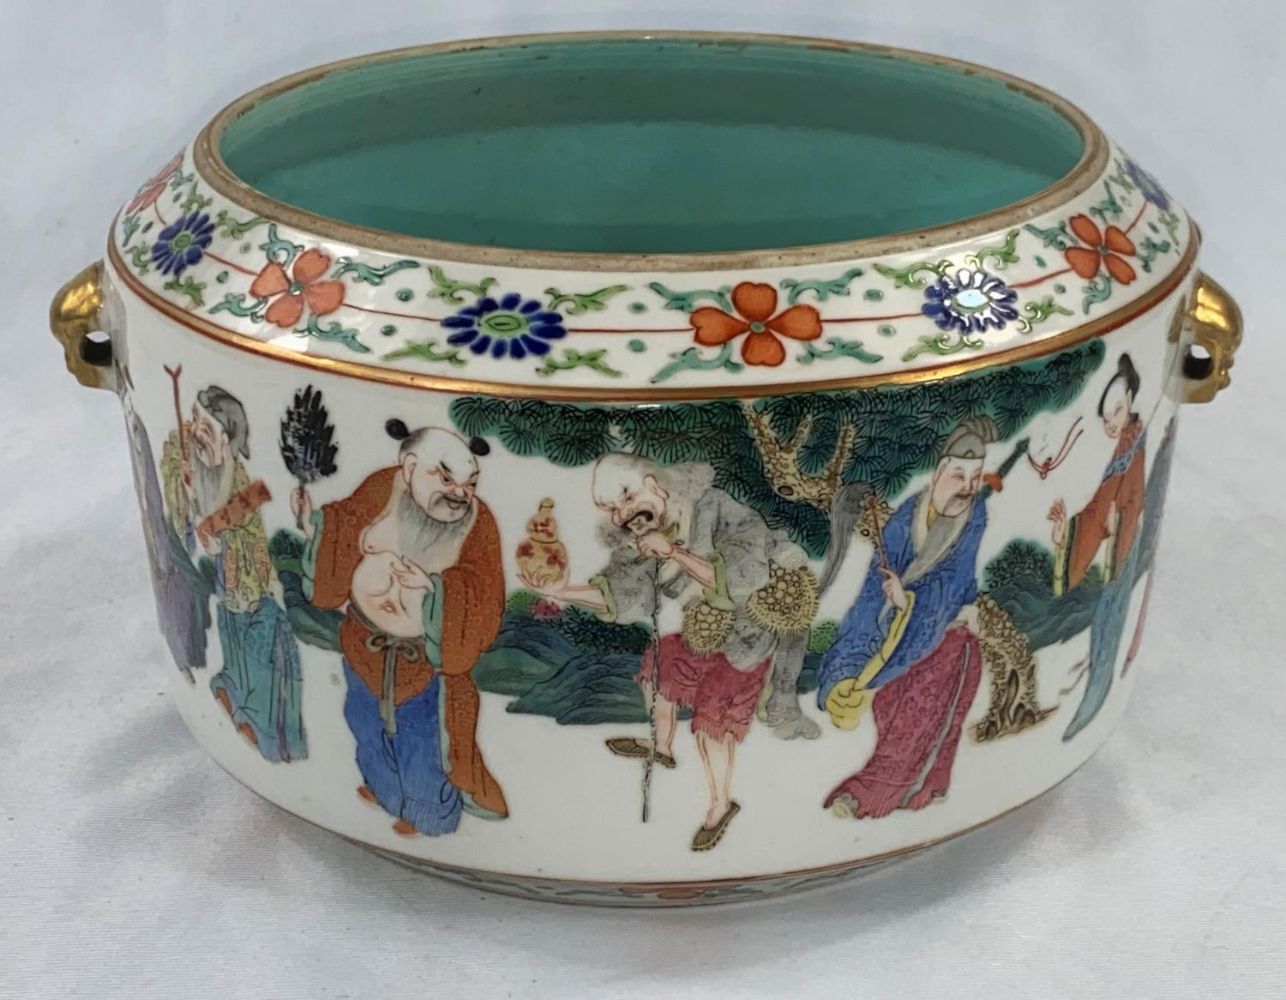 Collective Antiques - Oriental, Ceramics, Miscellanea, Silver, Jewellery, Pictures, Clocks and Furniture